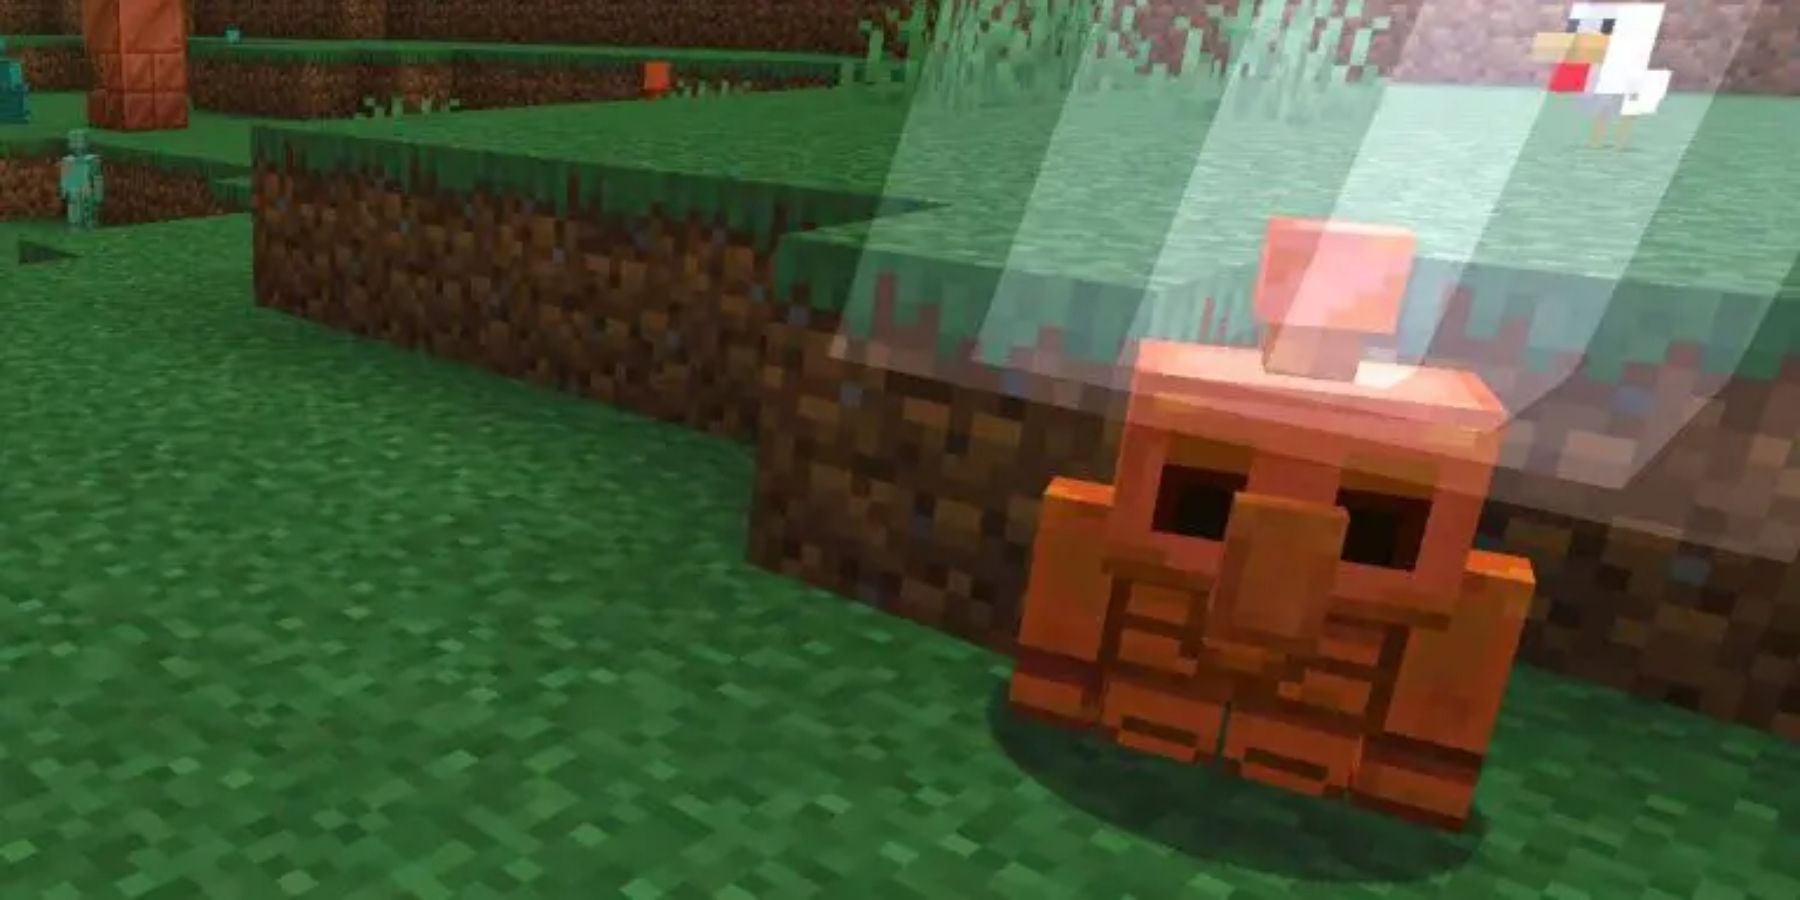 Copper Golem in Minecraft